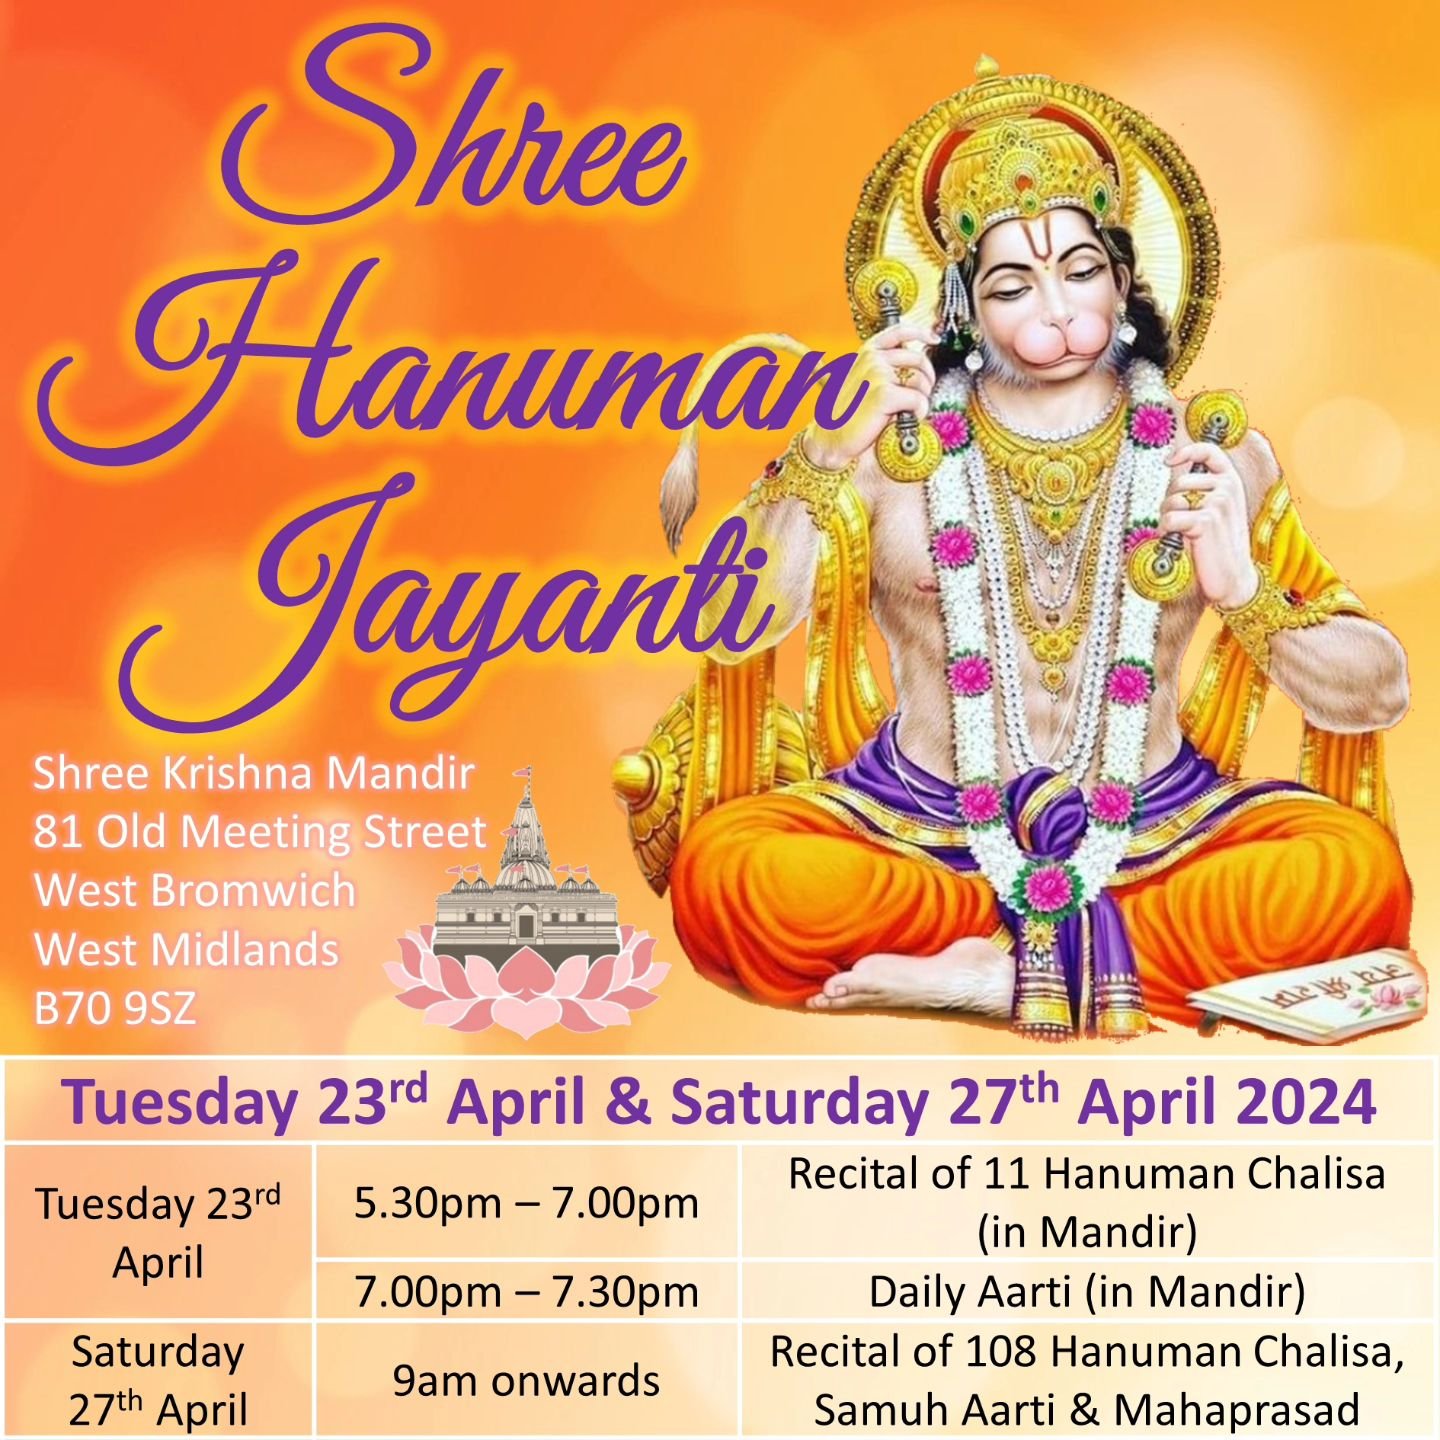 Jai Shree Krishna Everyone 

We will be celebrating Hanuman Jayanti on Tuesday 23rd April 2024 with 11 Hanuman Chalisas and on Saturday 27th April 2024 with 108 Hanuman Chalisas 🥳 

Hope to see you all there! 

Jai Shree Ram, Jai Hanuman 

#ShreeKri